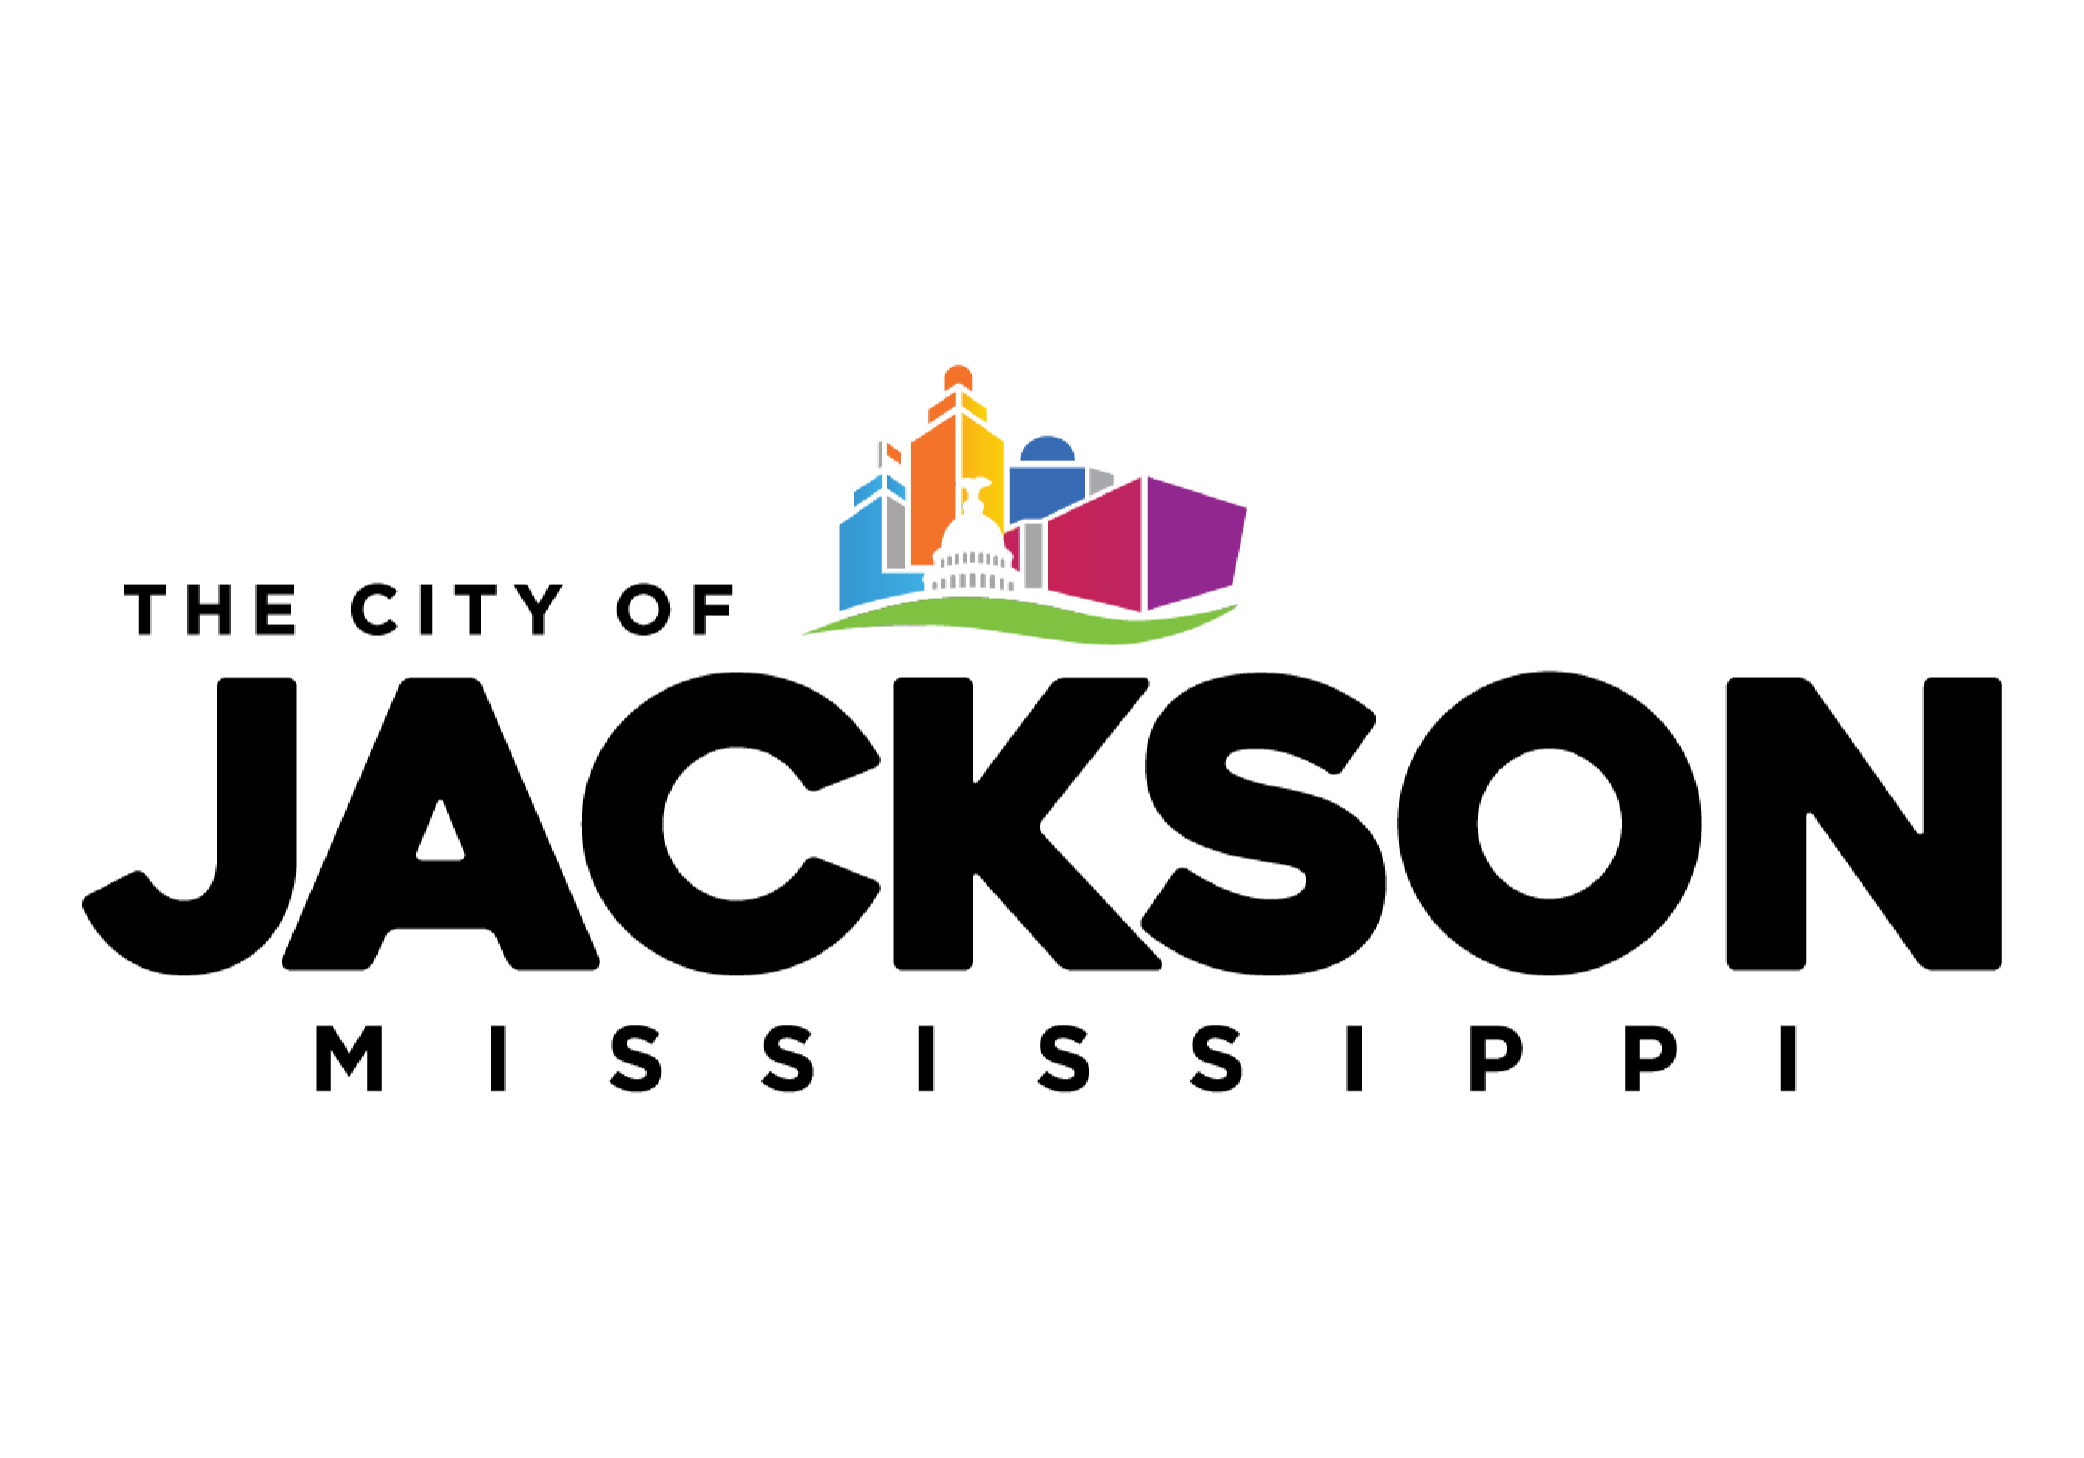 The city of jackson mississippi logo